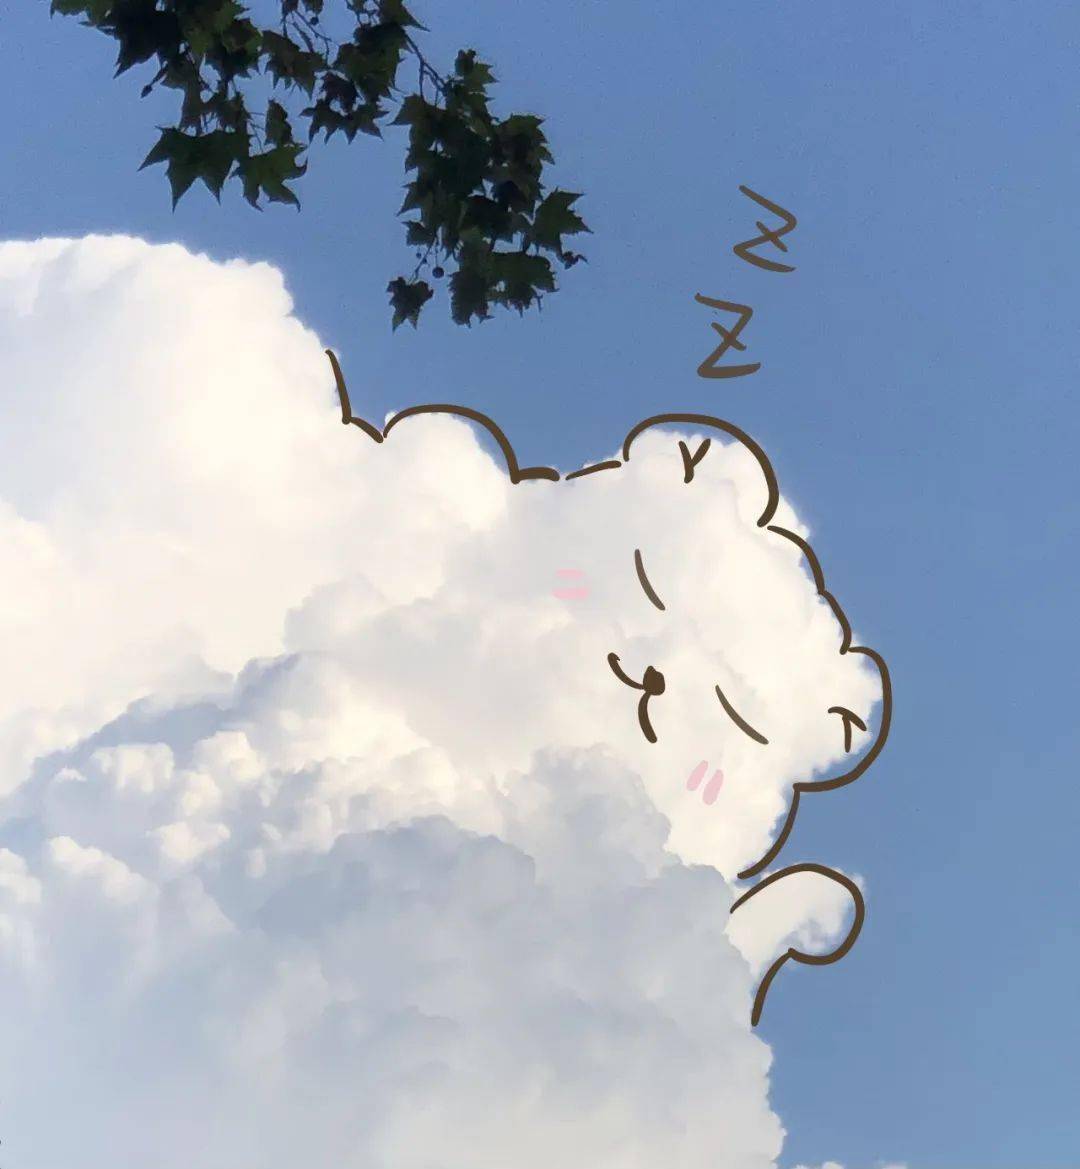 ins云朵背景图可爱涂鸦图片